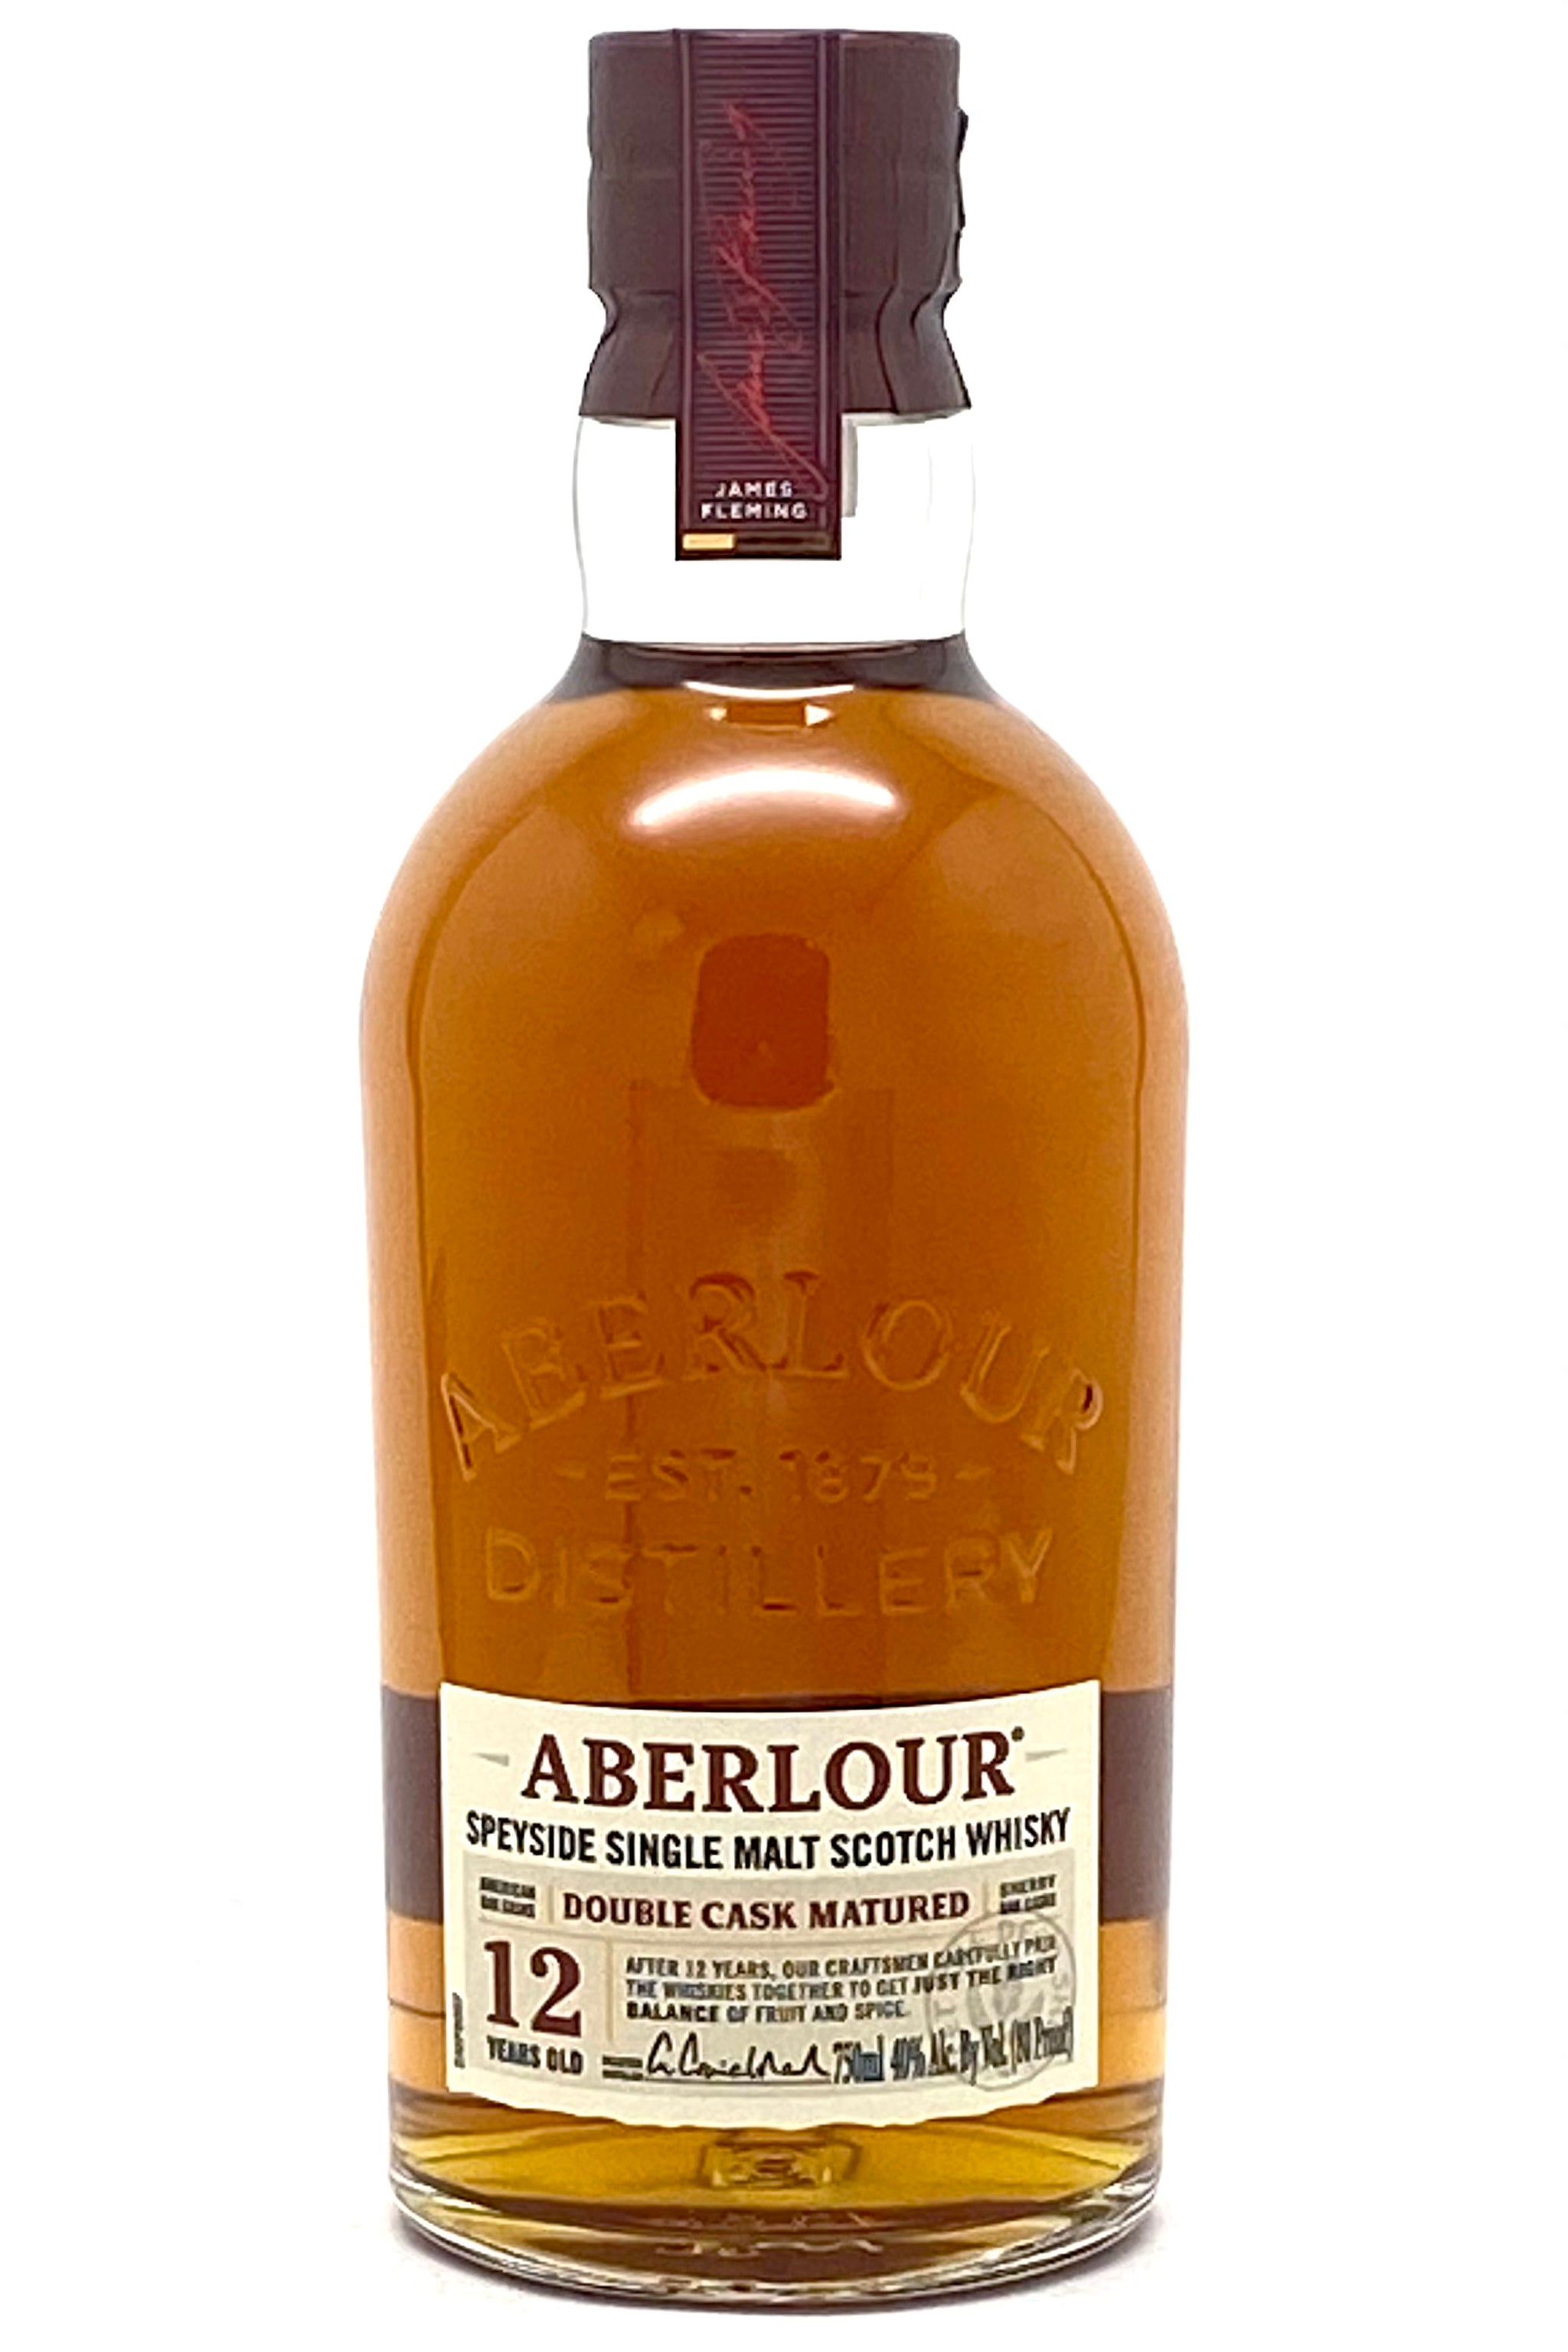 Aberlour Double Cask 18 Year Old Single Malt Scotch Whisky, Speyside,  Scotland